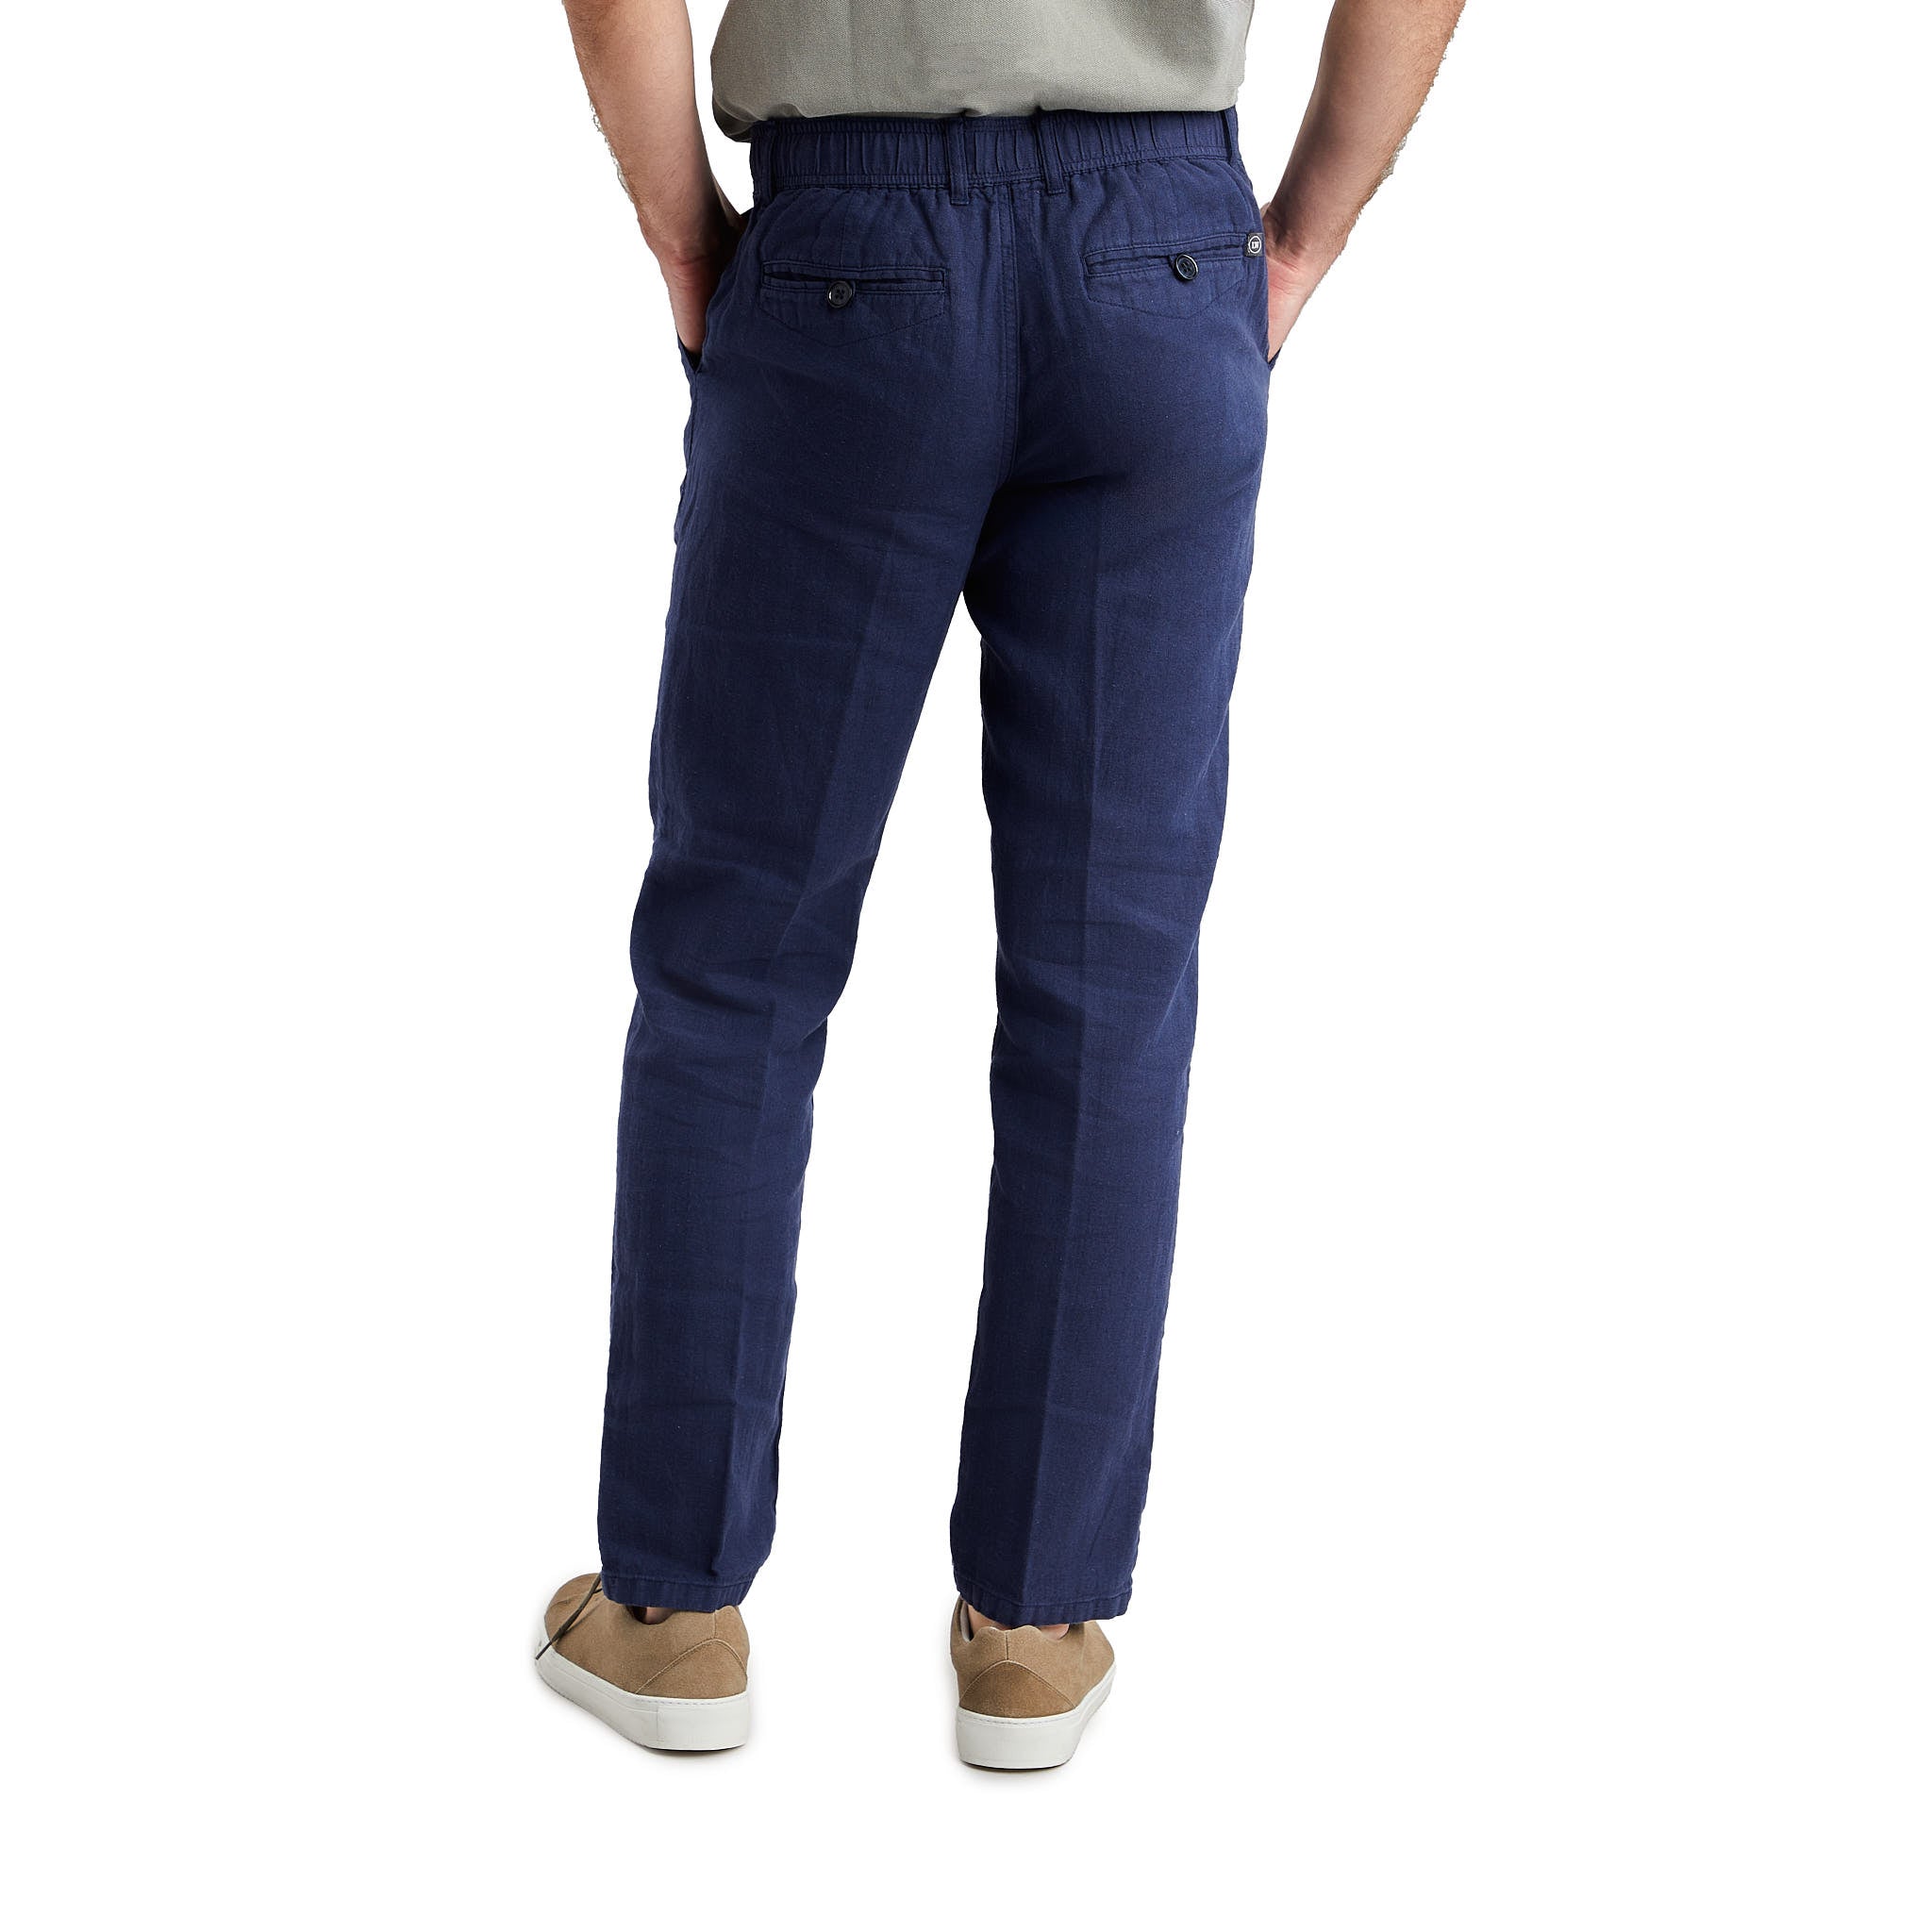 Navy Linen Pants